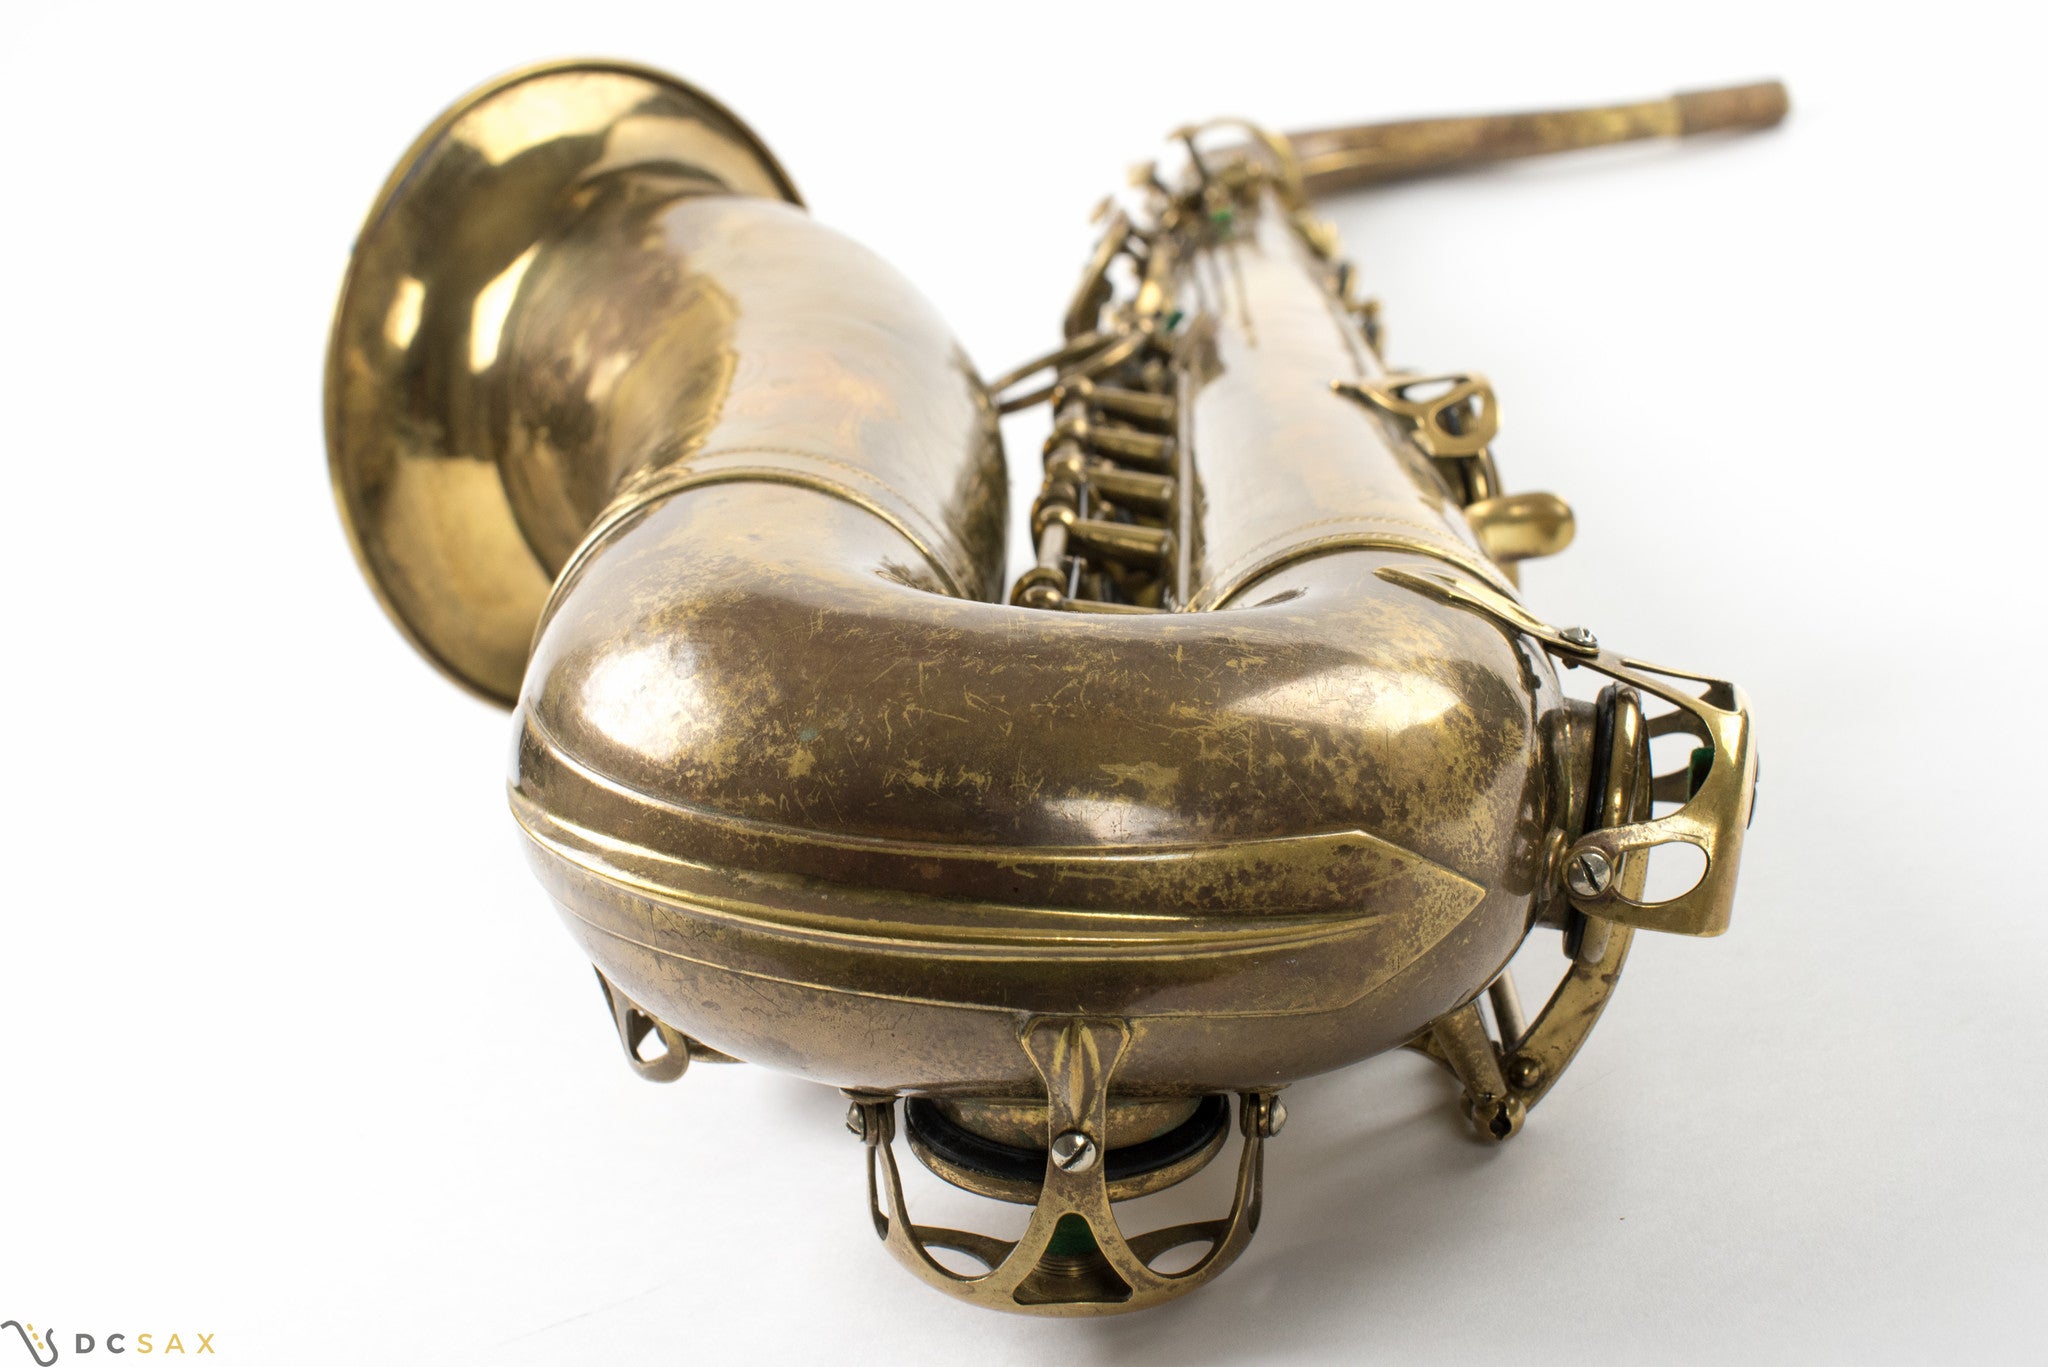 1935 Selmer Balanced Action Tenor Saxophone, s/n 21,xxx